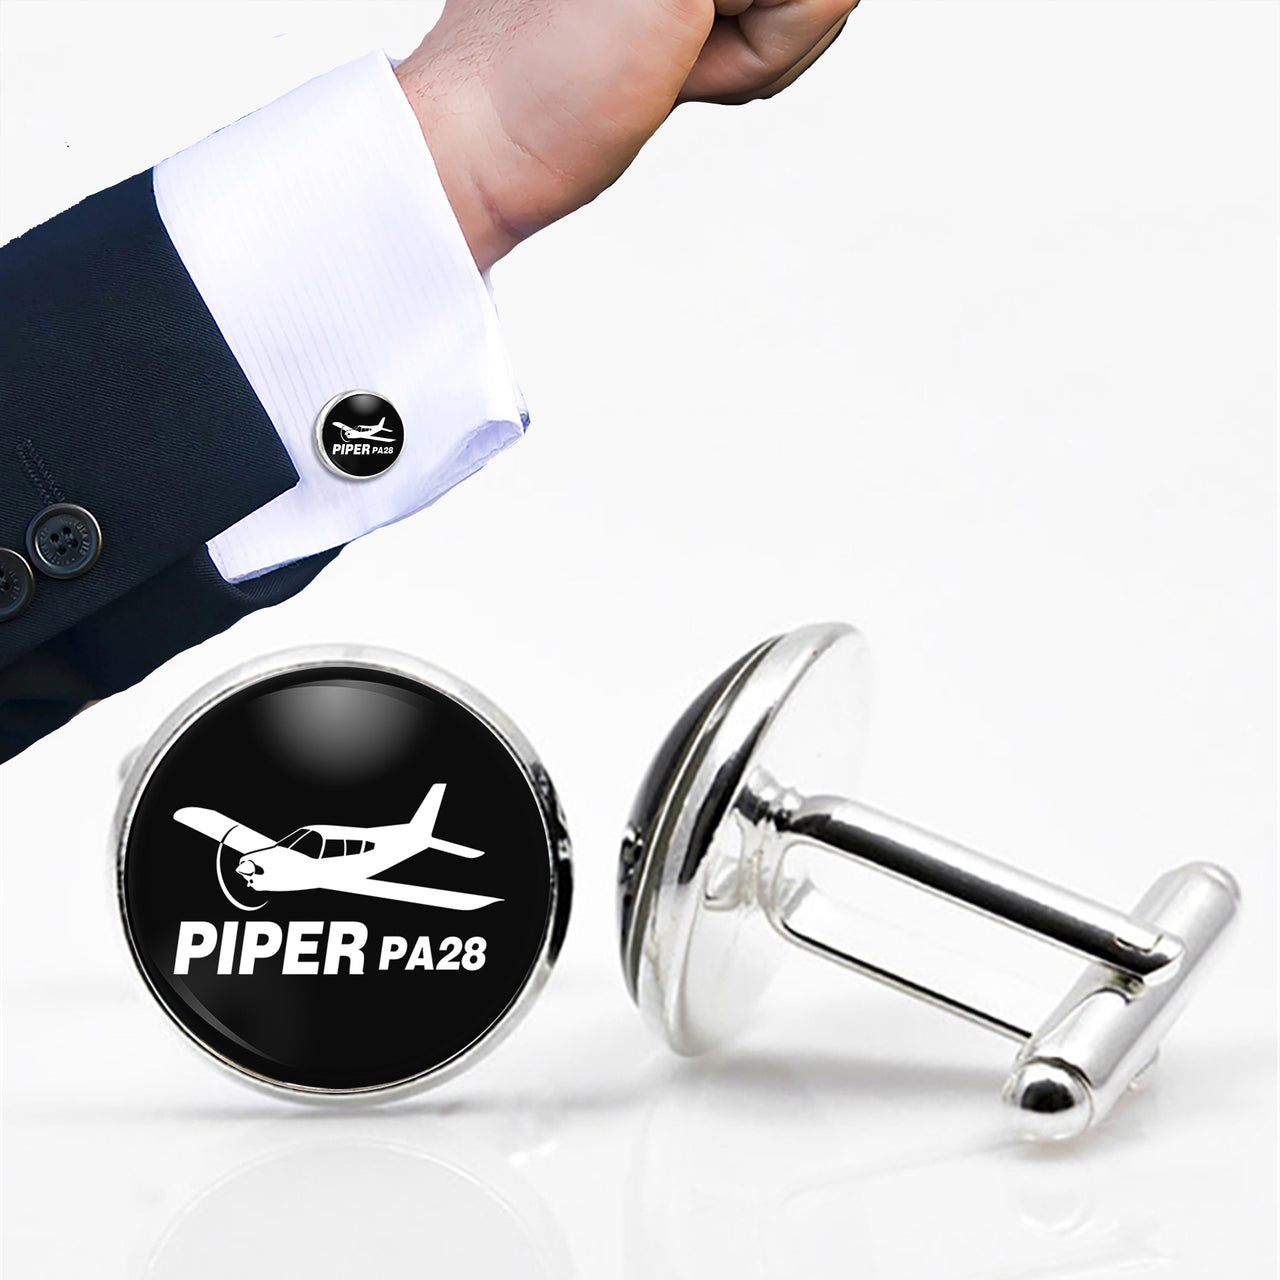 The Piper PA28 Designed Cuff Links